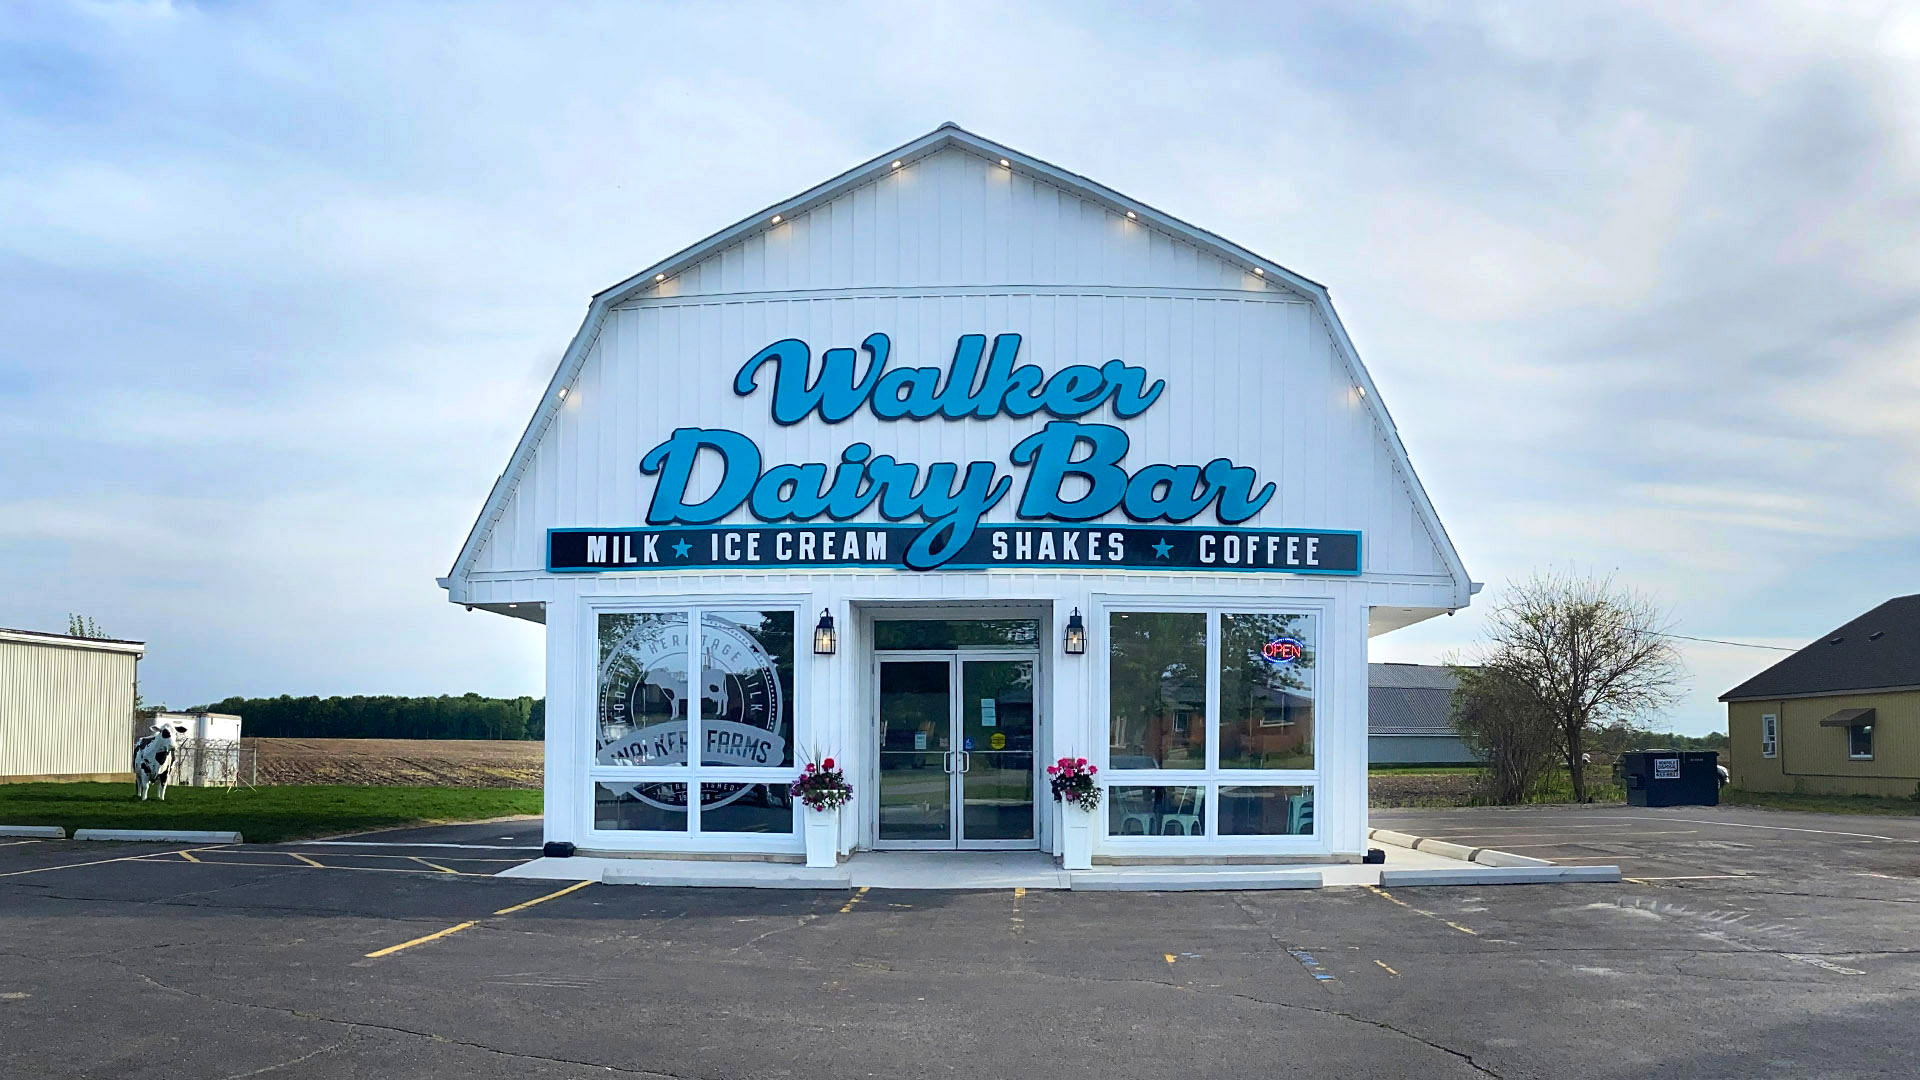 Walker Dairy farm and Bar building.